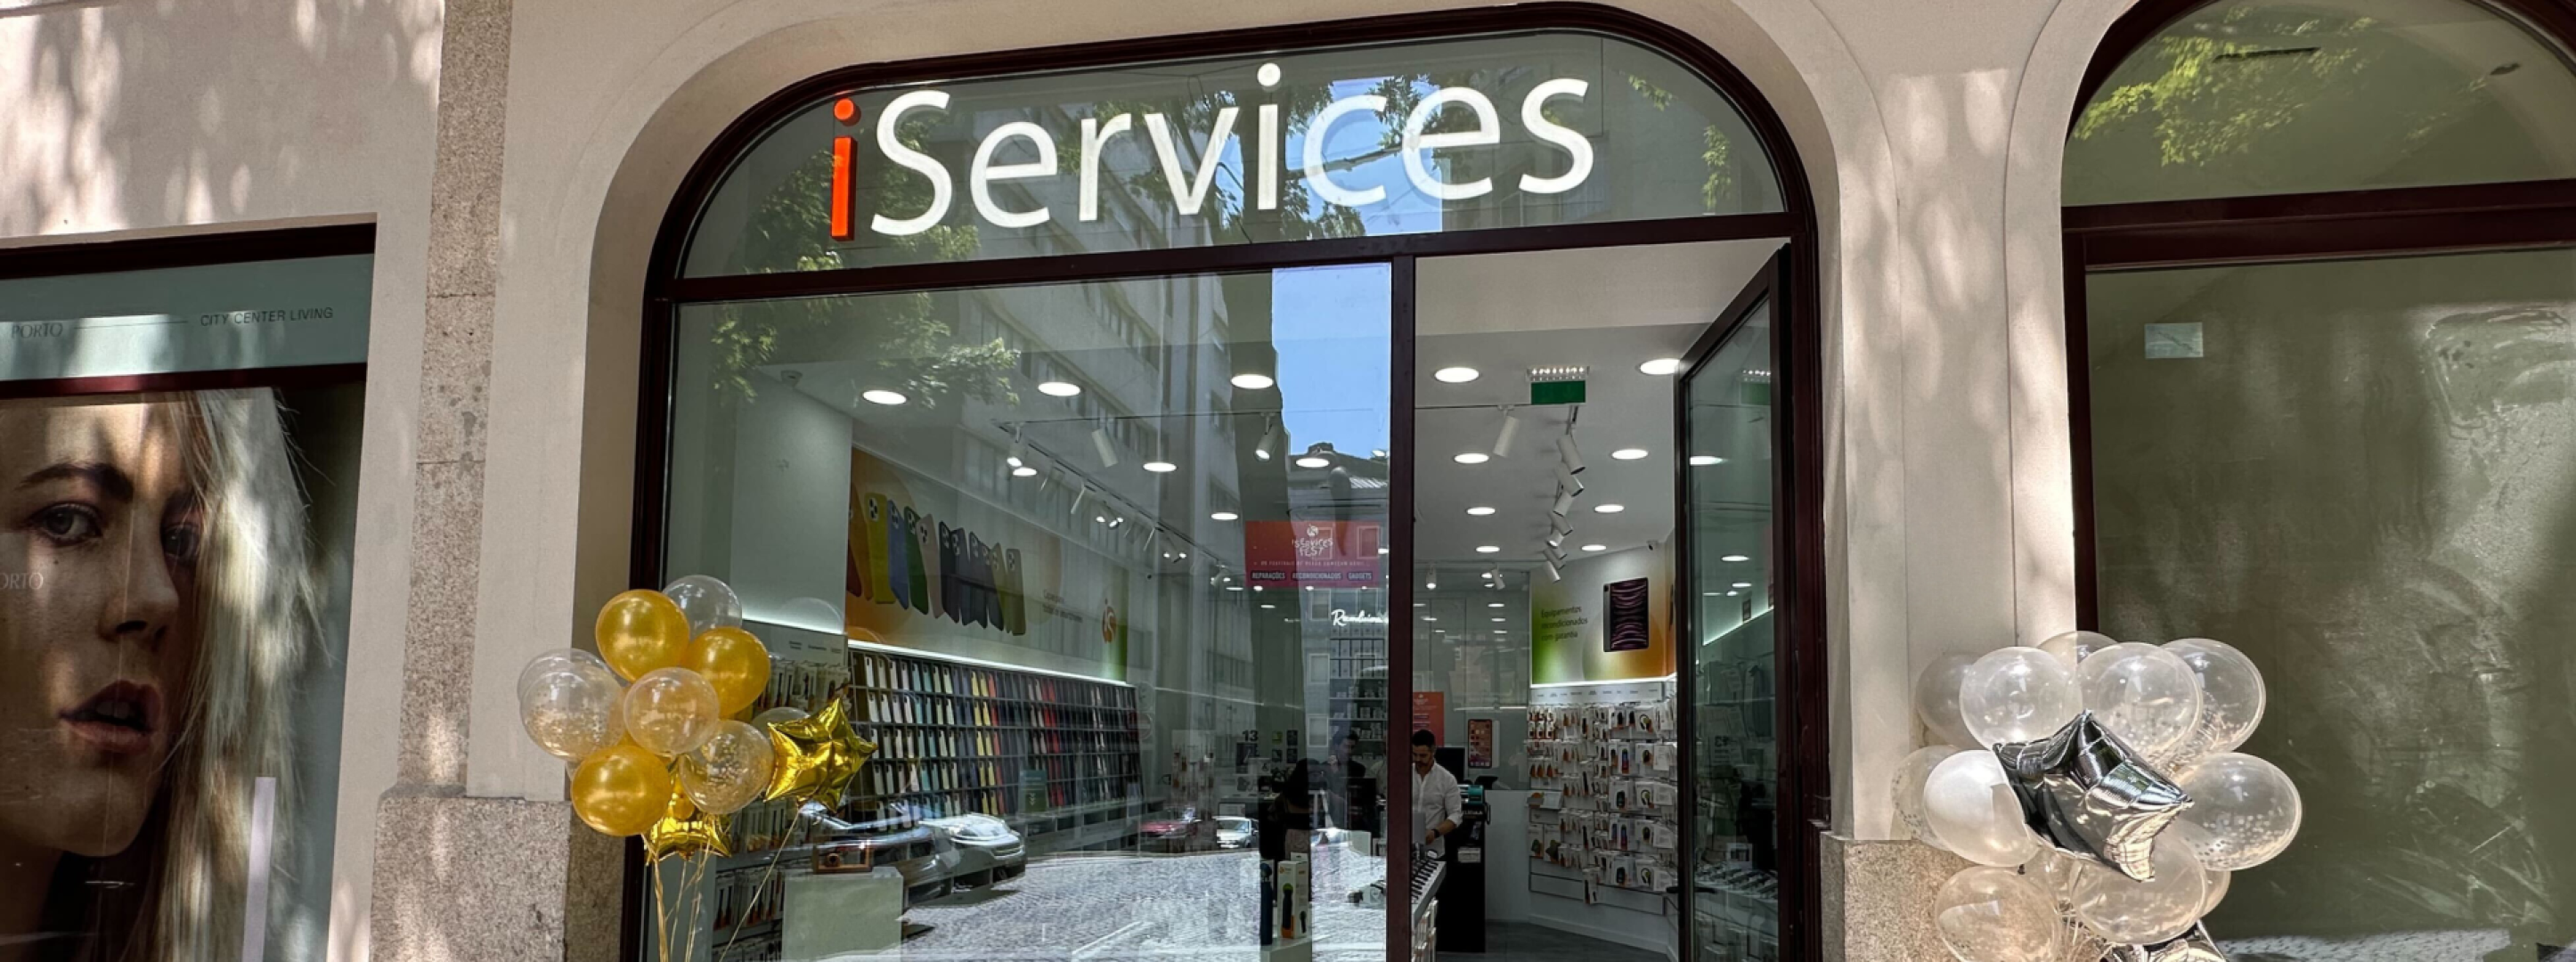 iServices abre loja na Rua de Sá da Bandeira, no Porto  blog post